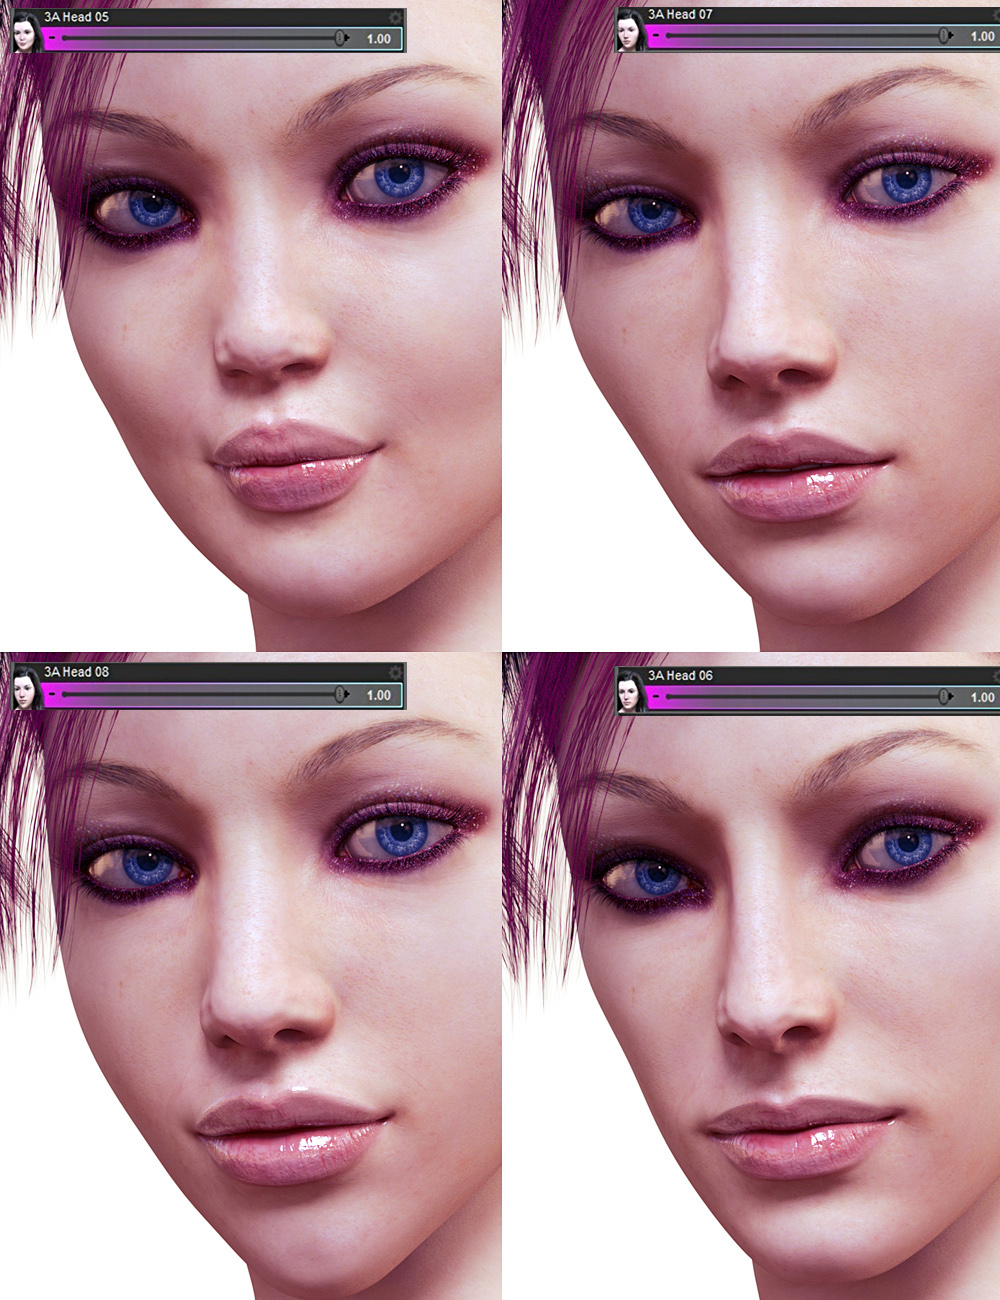 Versatile Morphs for Genesis 3 Female by: 3anson, 3D Models by Daz 3D